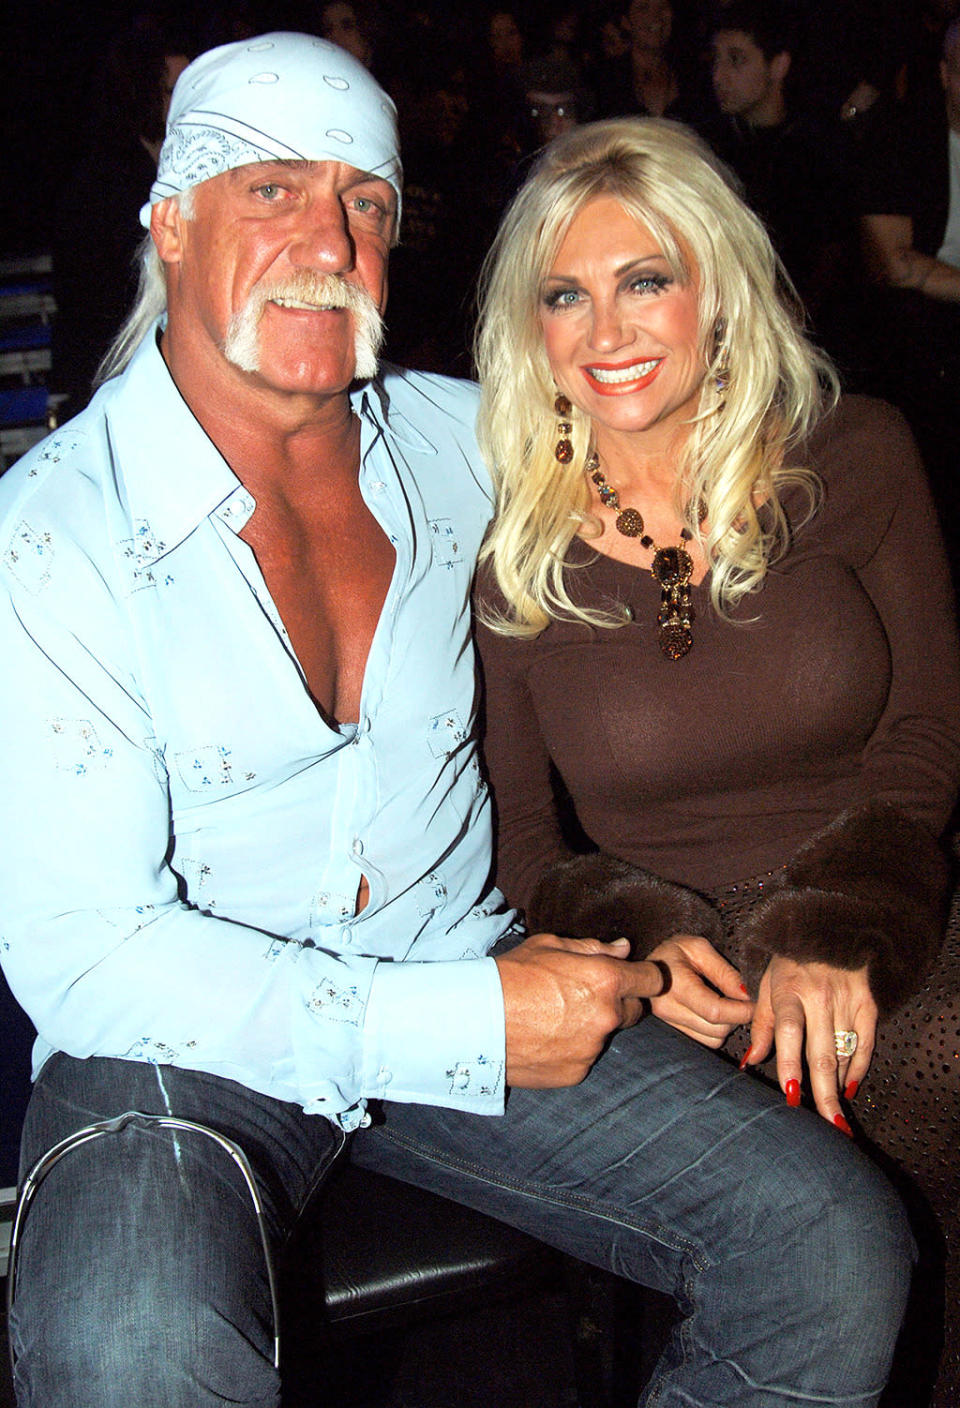 Hulk and Linda Hogan